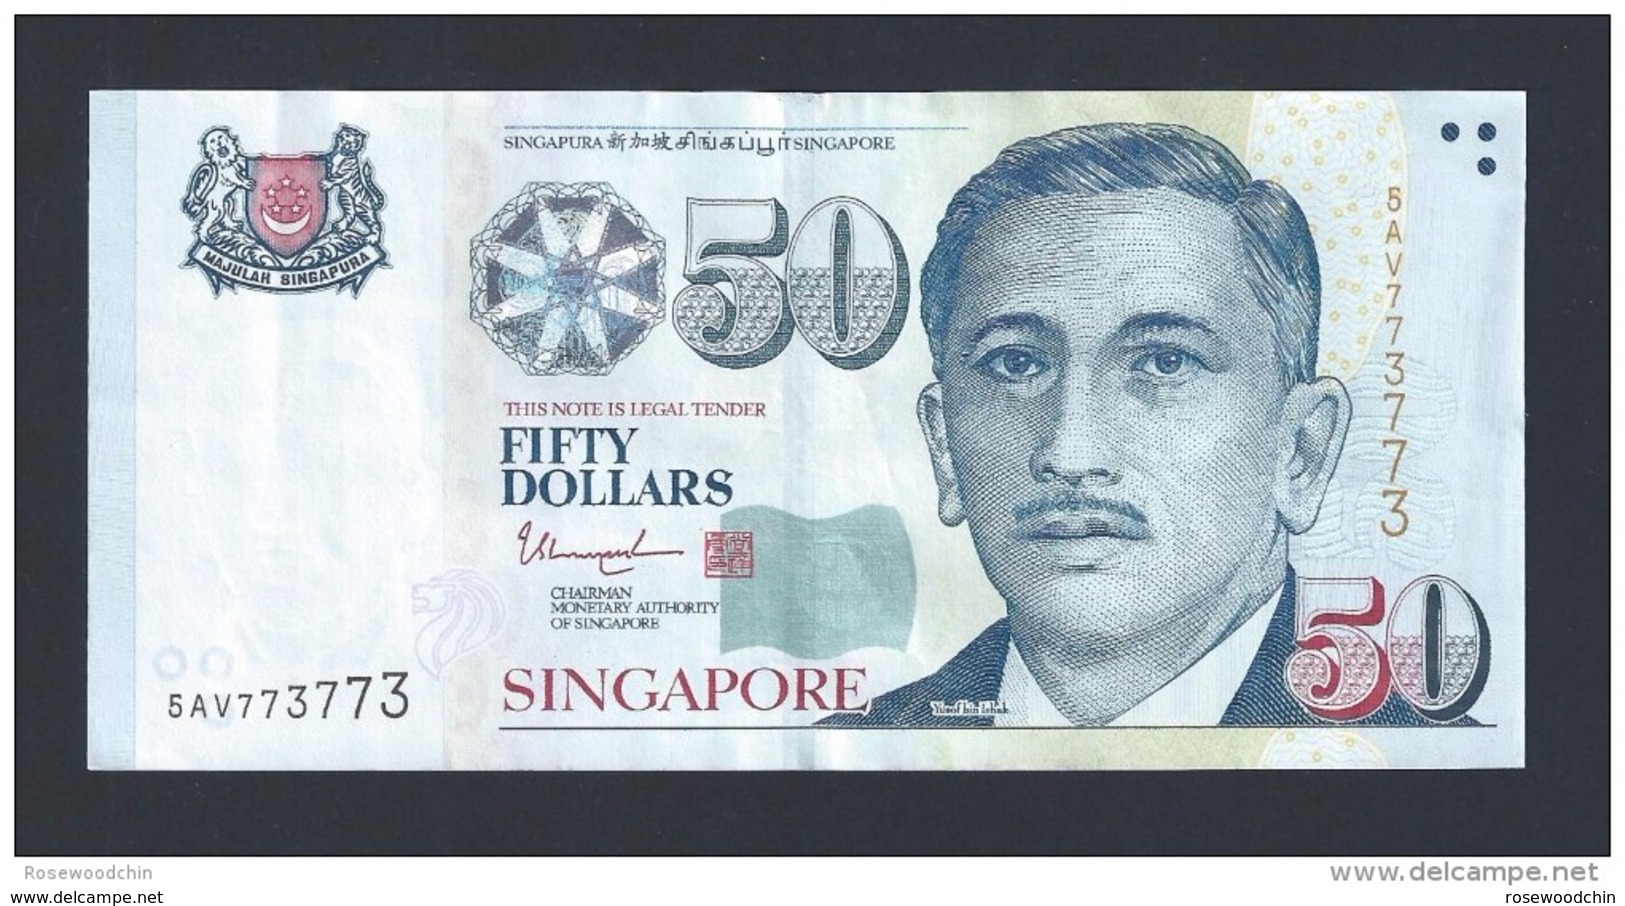 $50 Singapore Portrait Series Money Banknote Repeater Lucky Number 5AV773773 ( #103) - Singapore